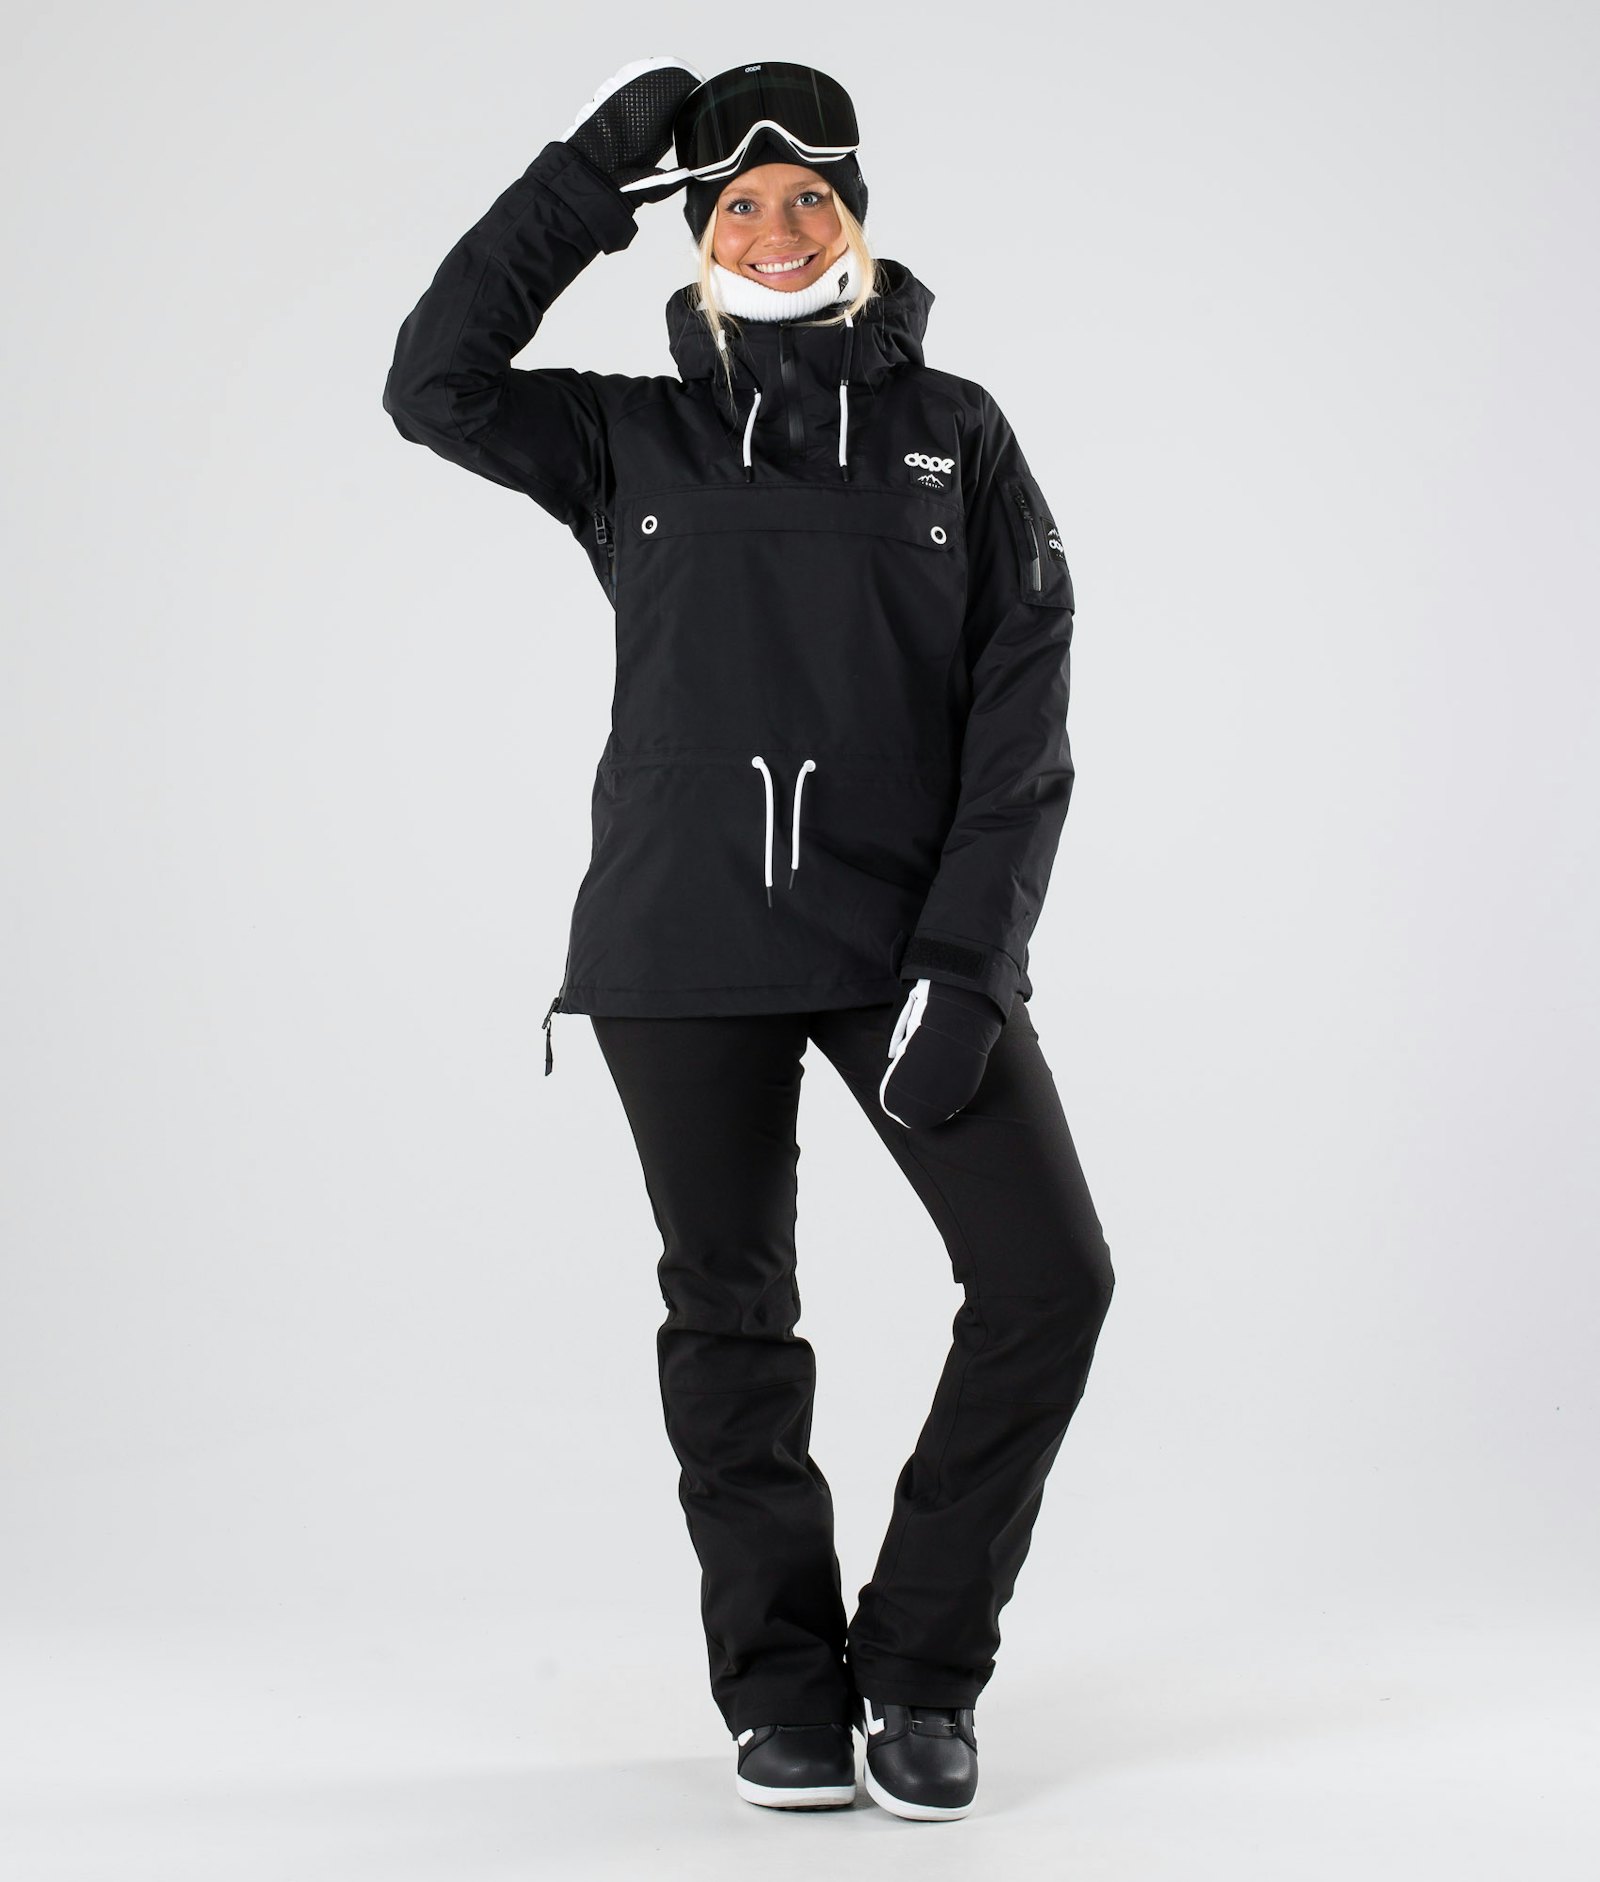 Annok W 2019 Veste Snowboard Femme Black